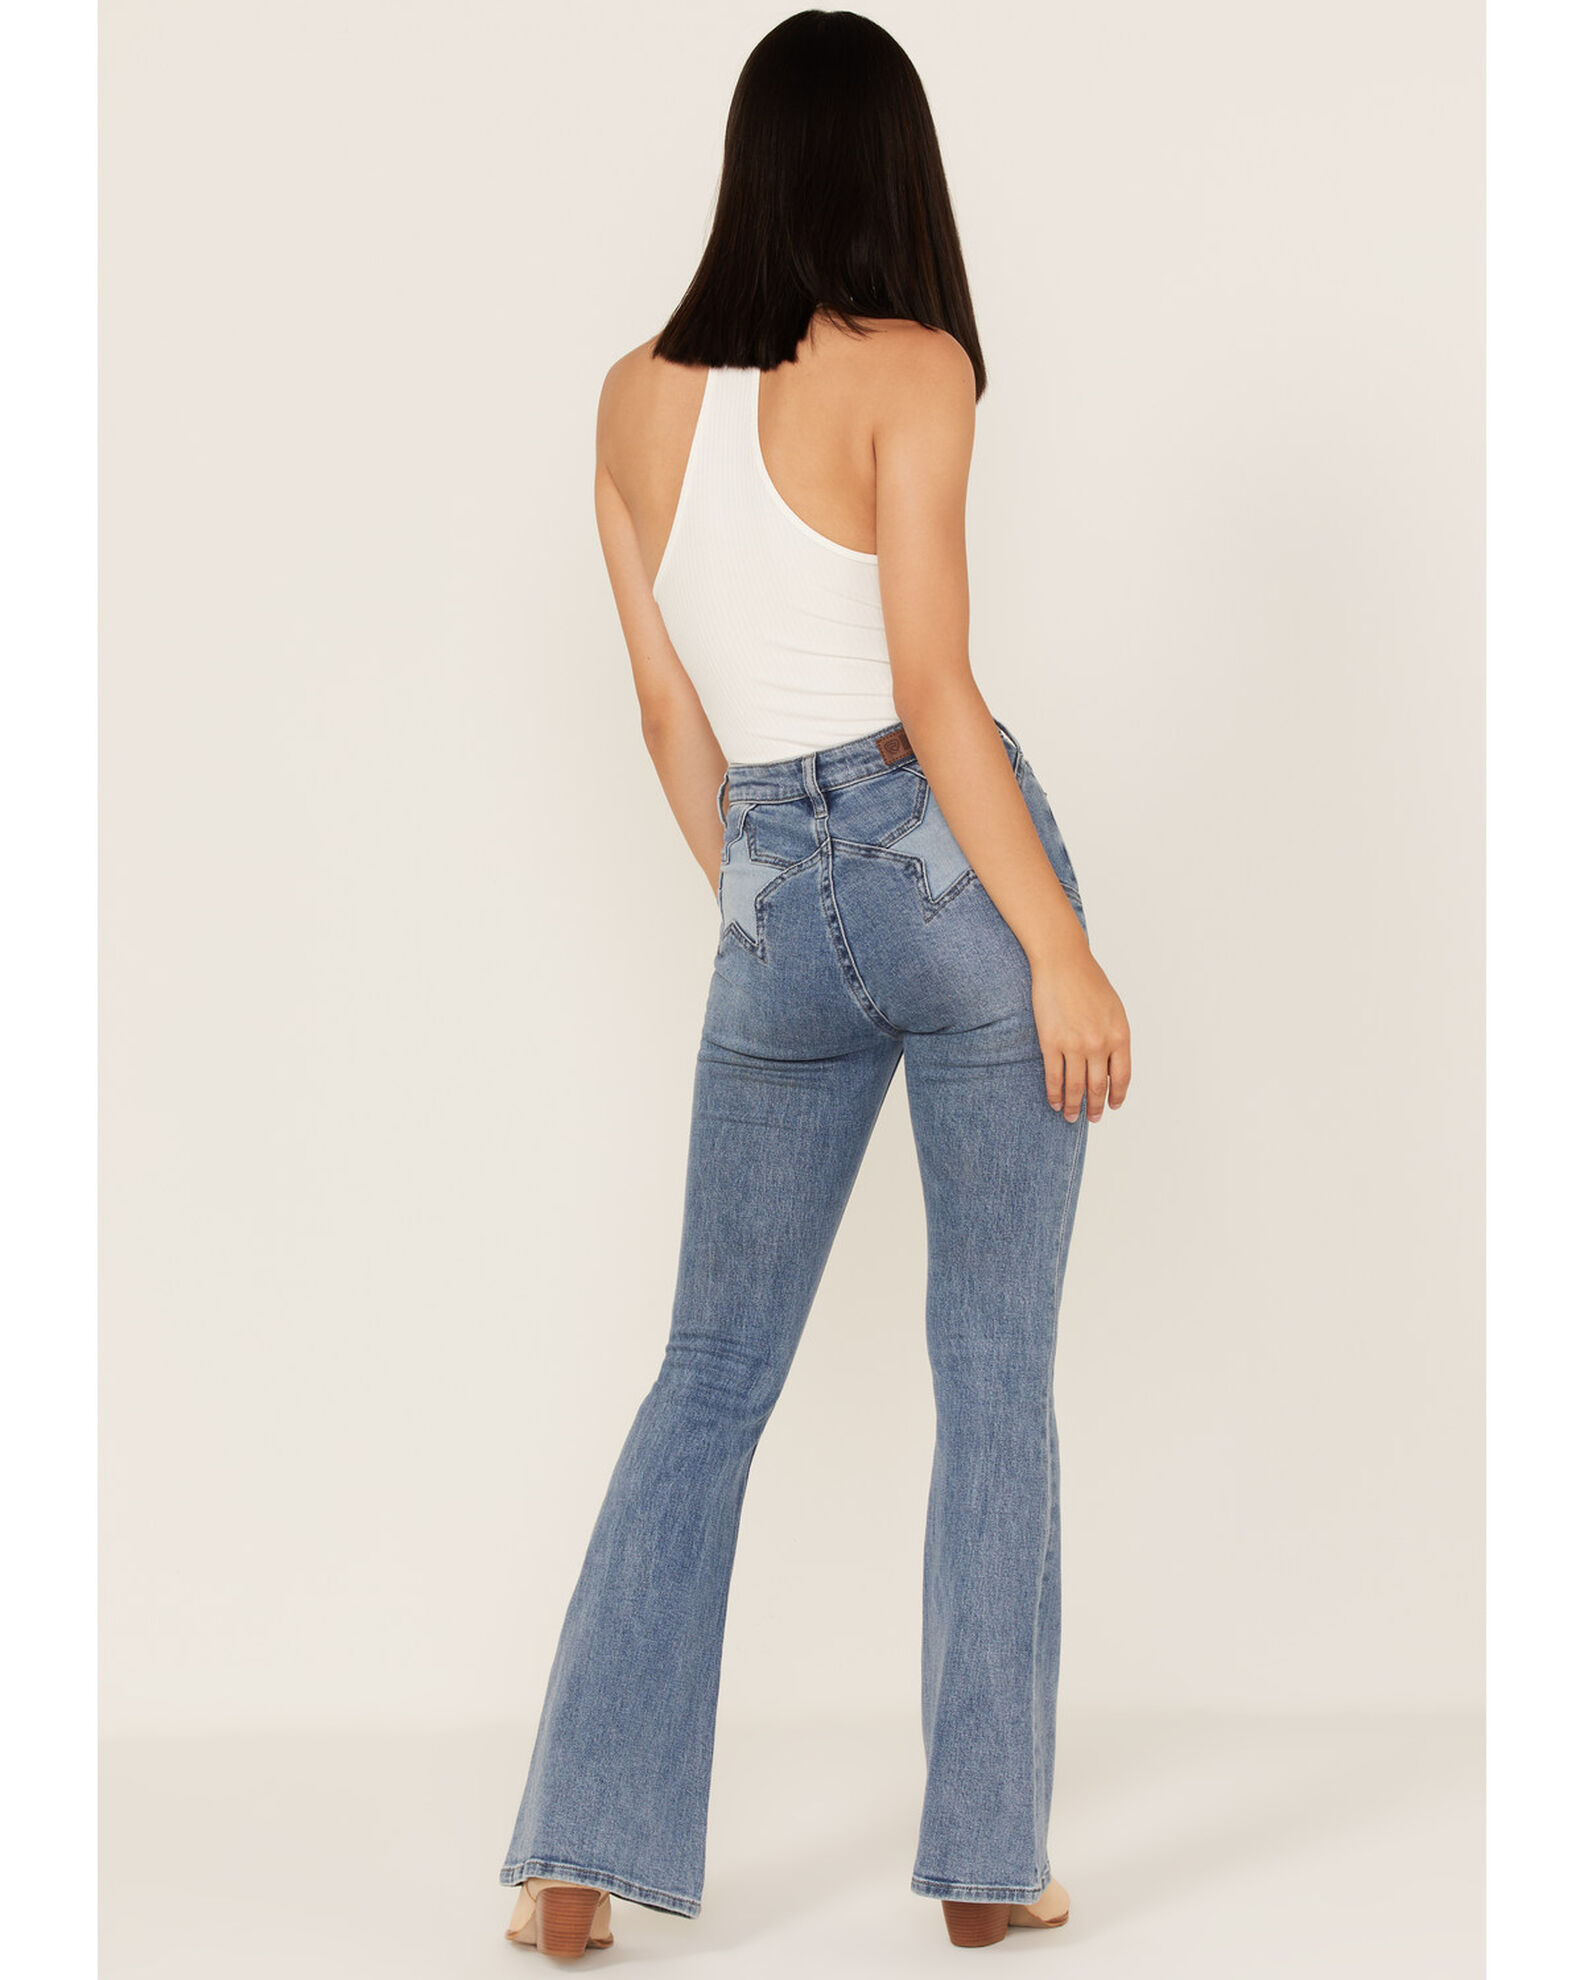 Product Name: Rock & Roll Denim Women's Medium Wash High Rise Star Pocket  Flare Jeans